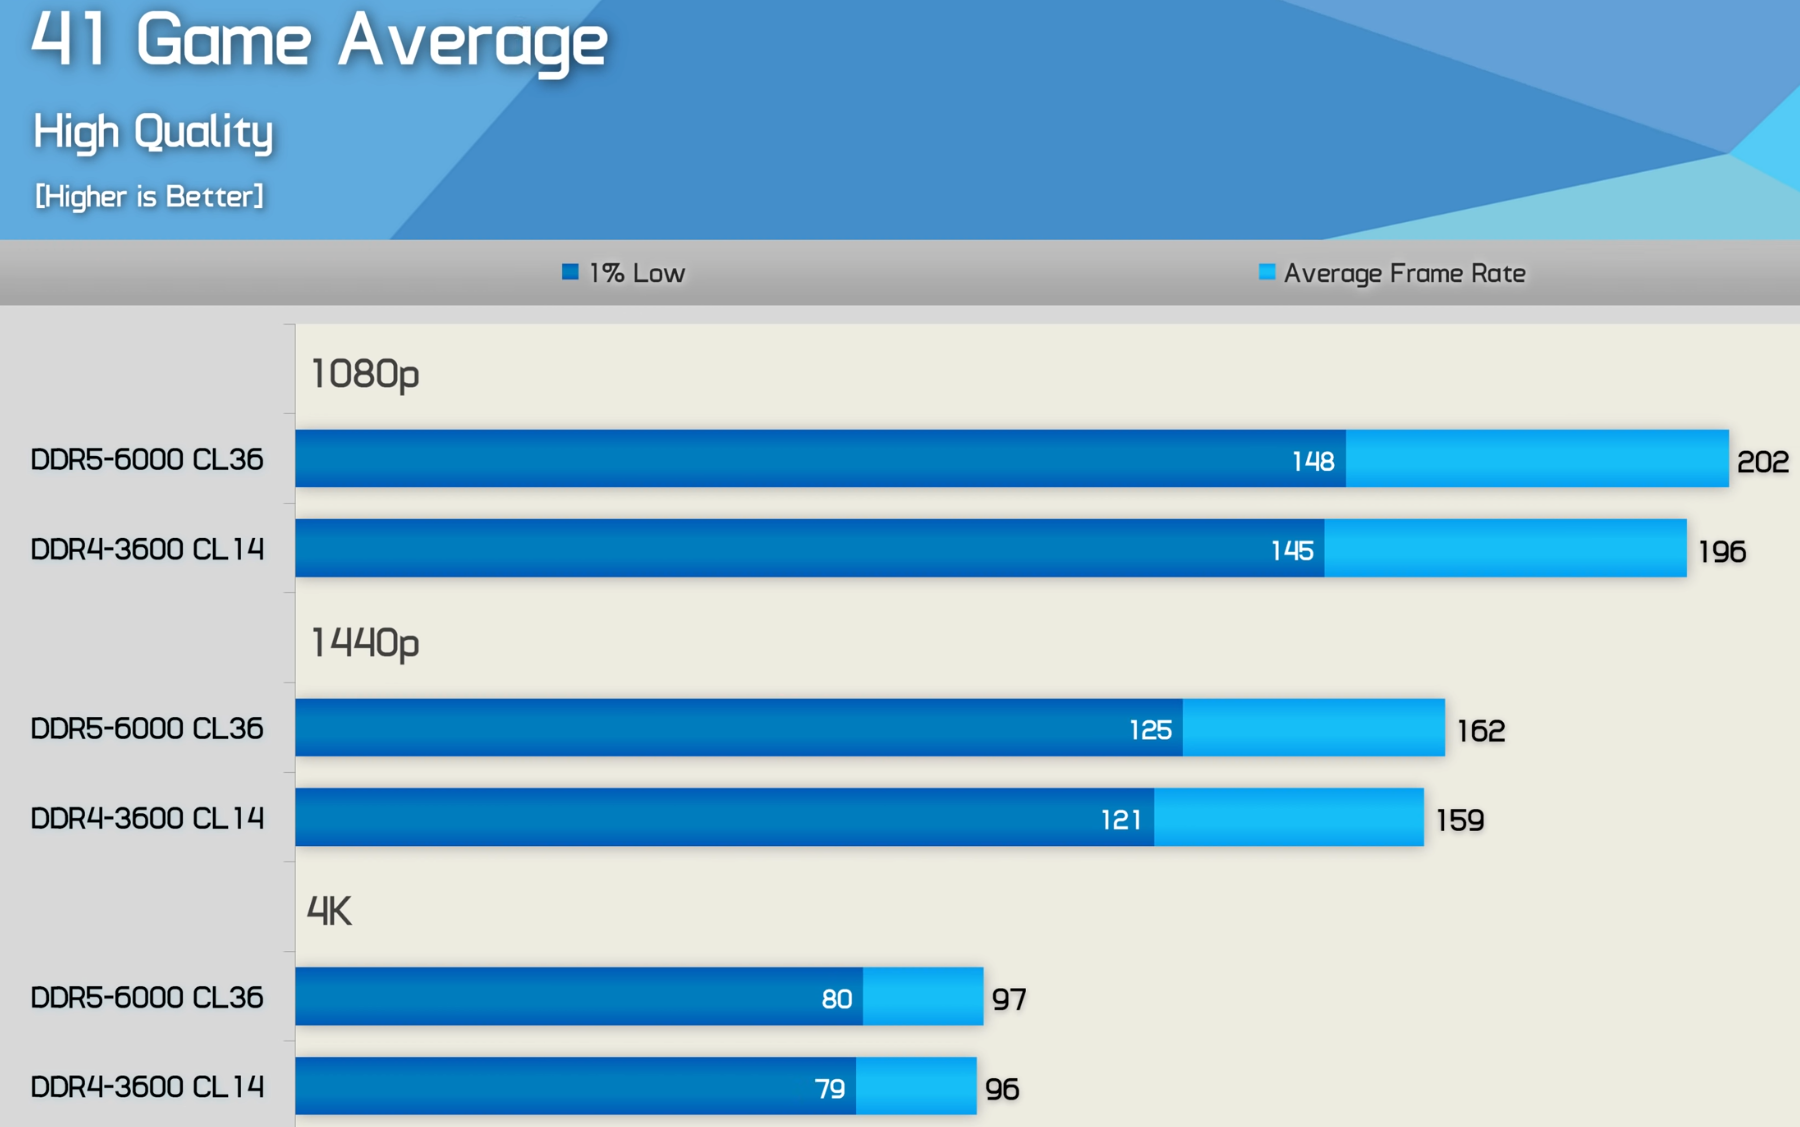 DDR4 vs DDR5 benchmark across 41 games.